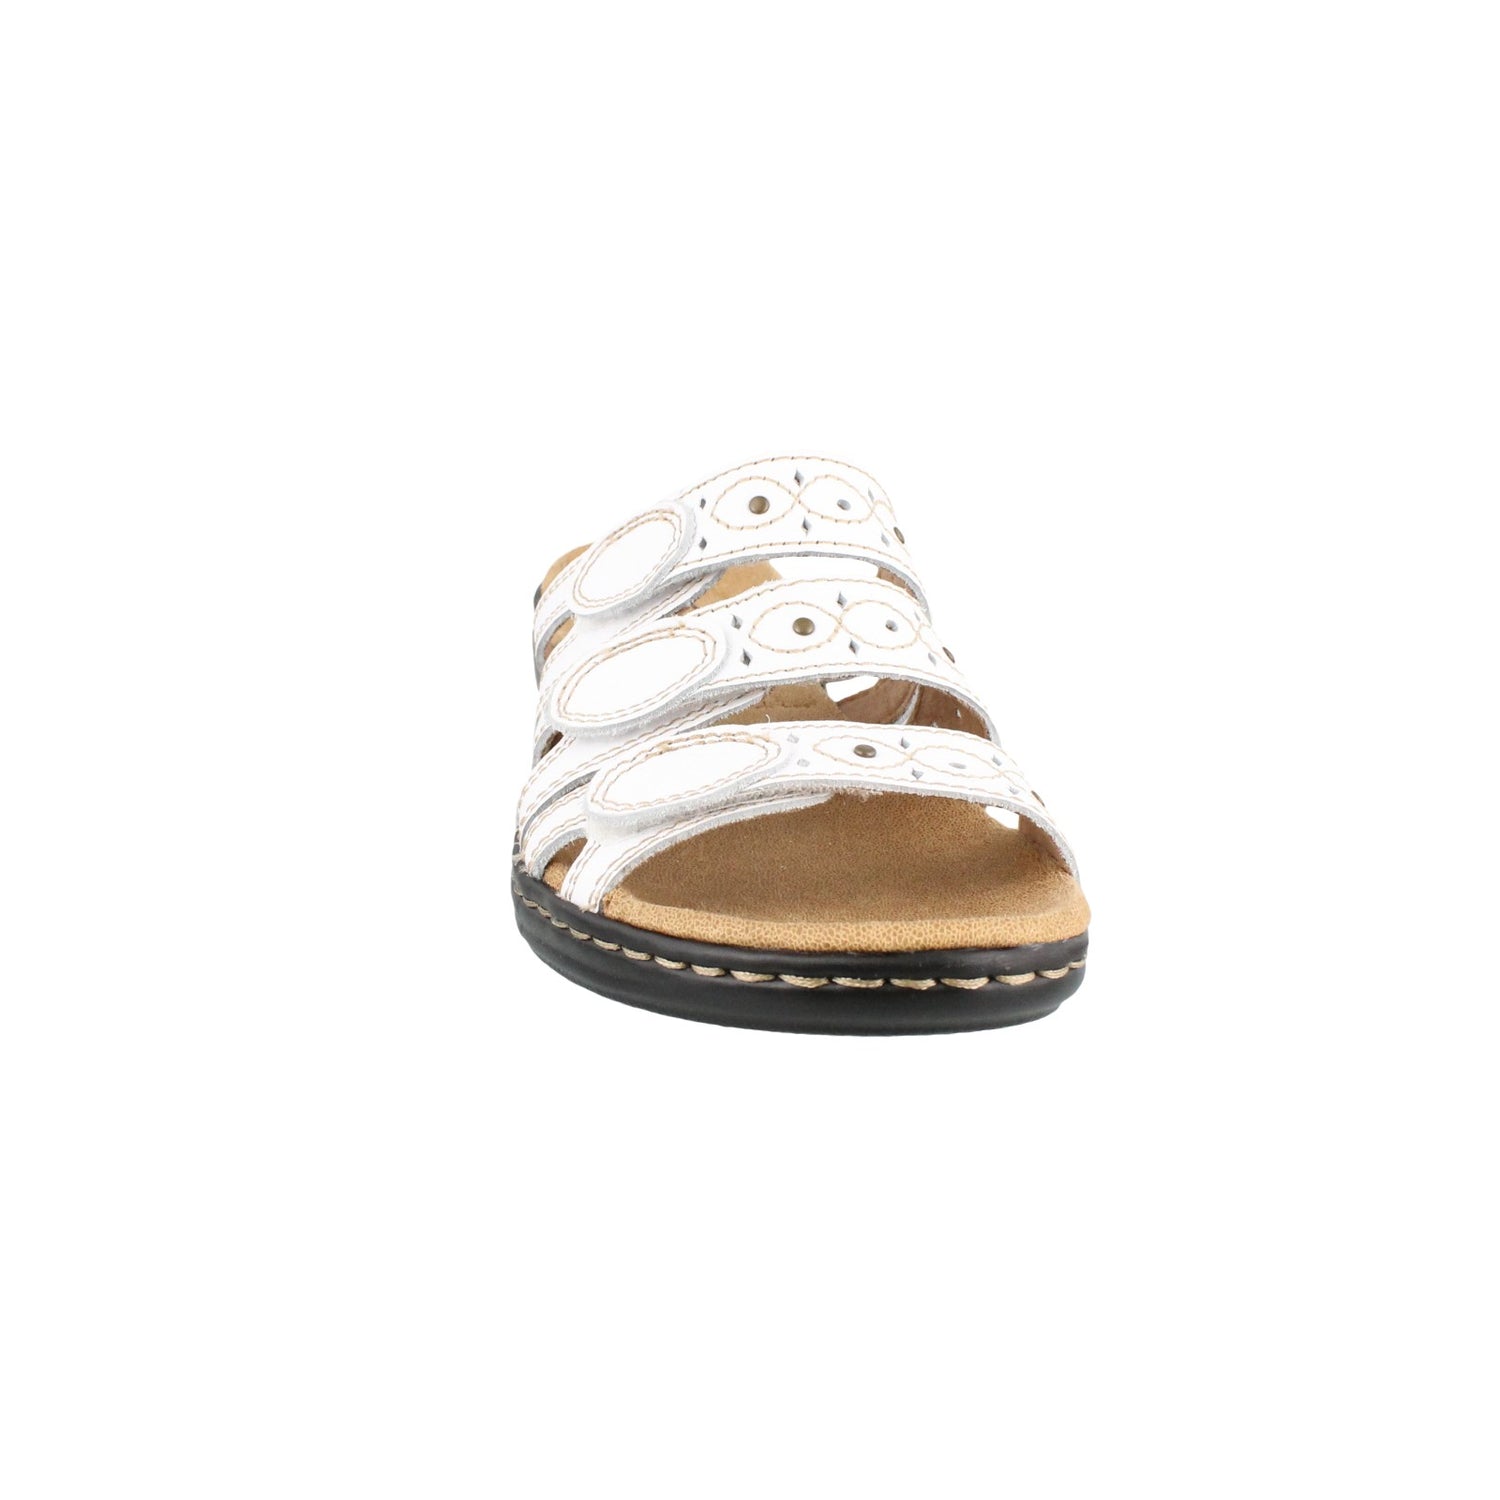 Peltz Shoes  Women's Clarks Lesia Cacti Slide Sandals WHITE 26109039